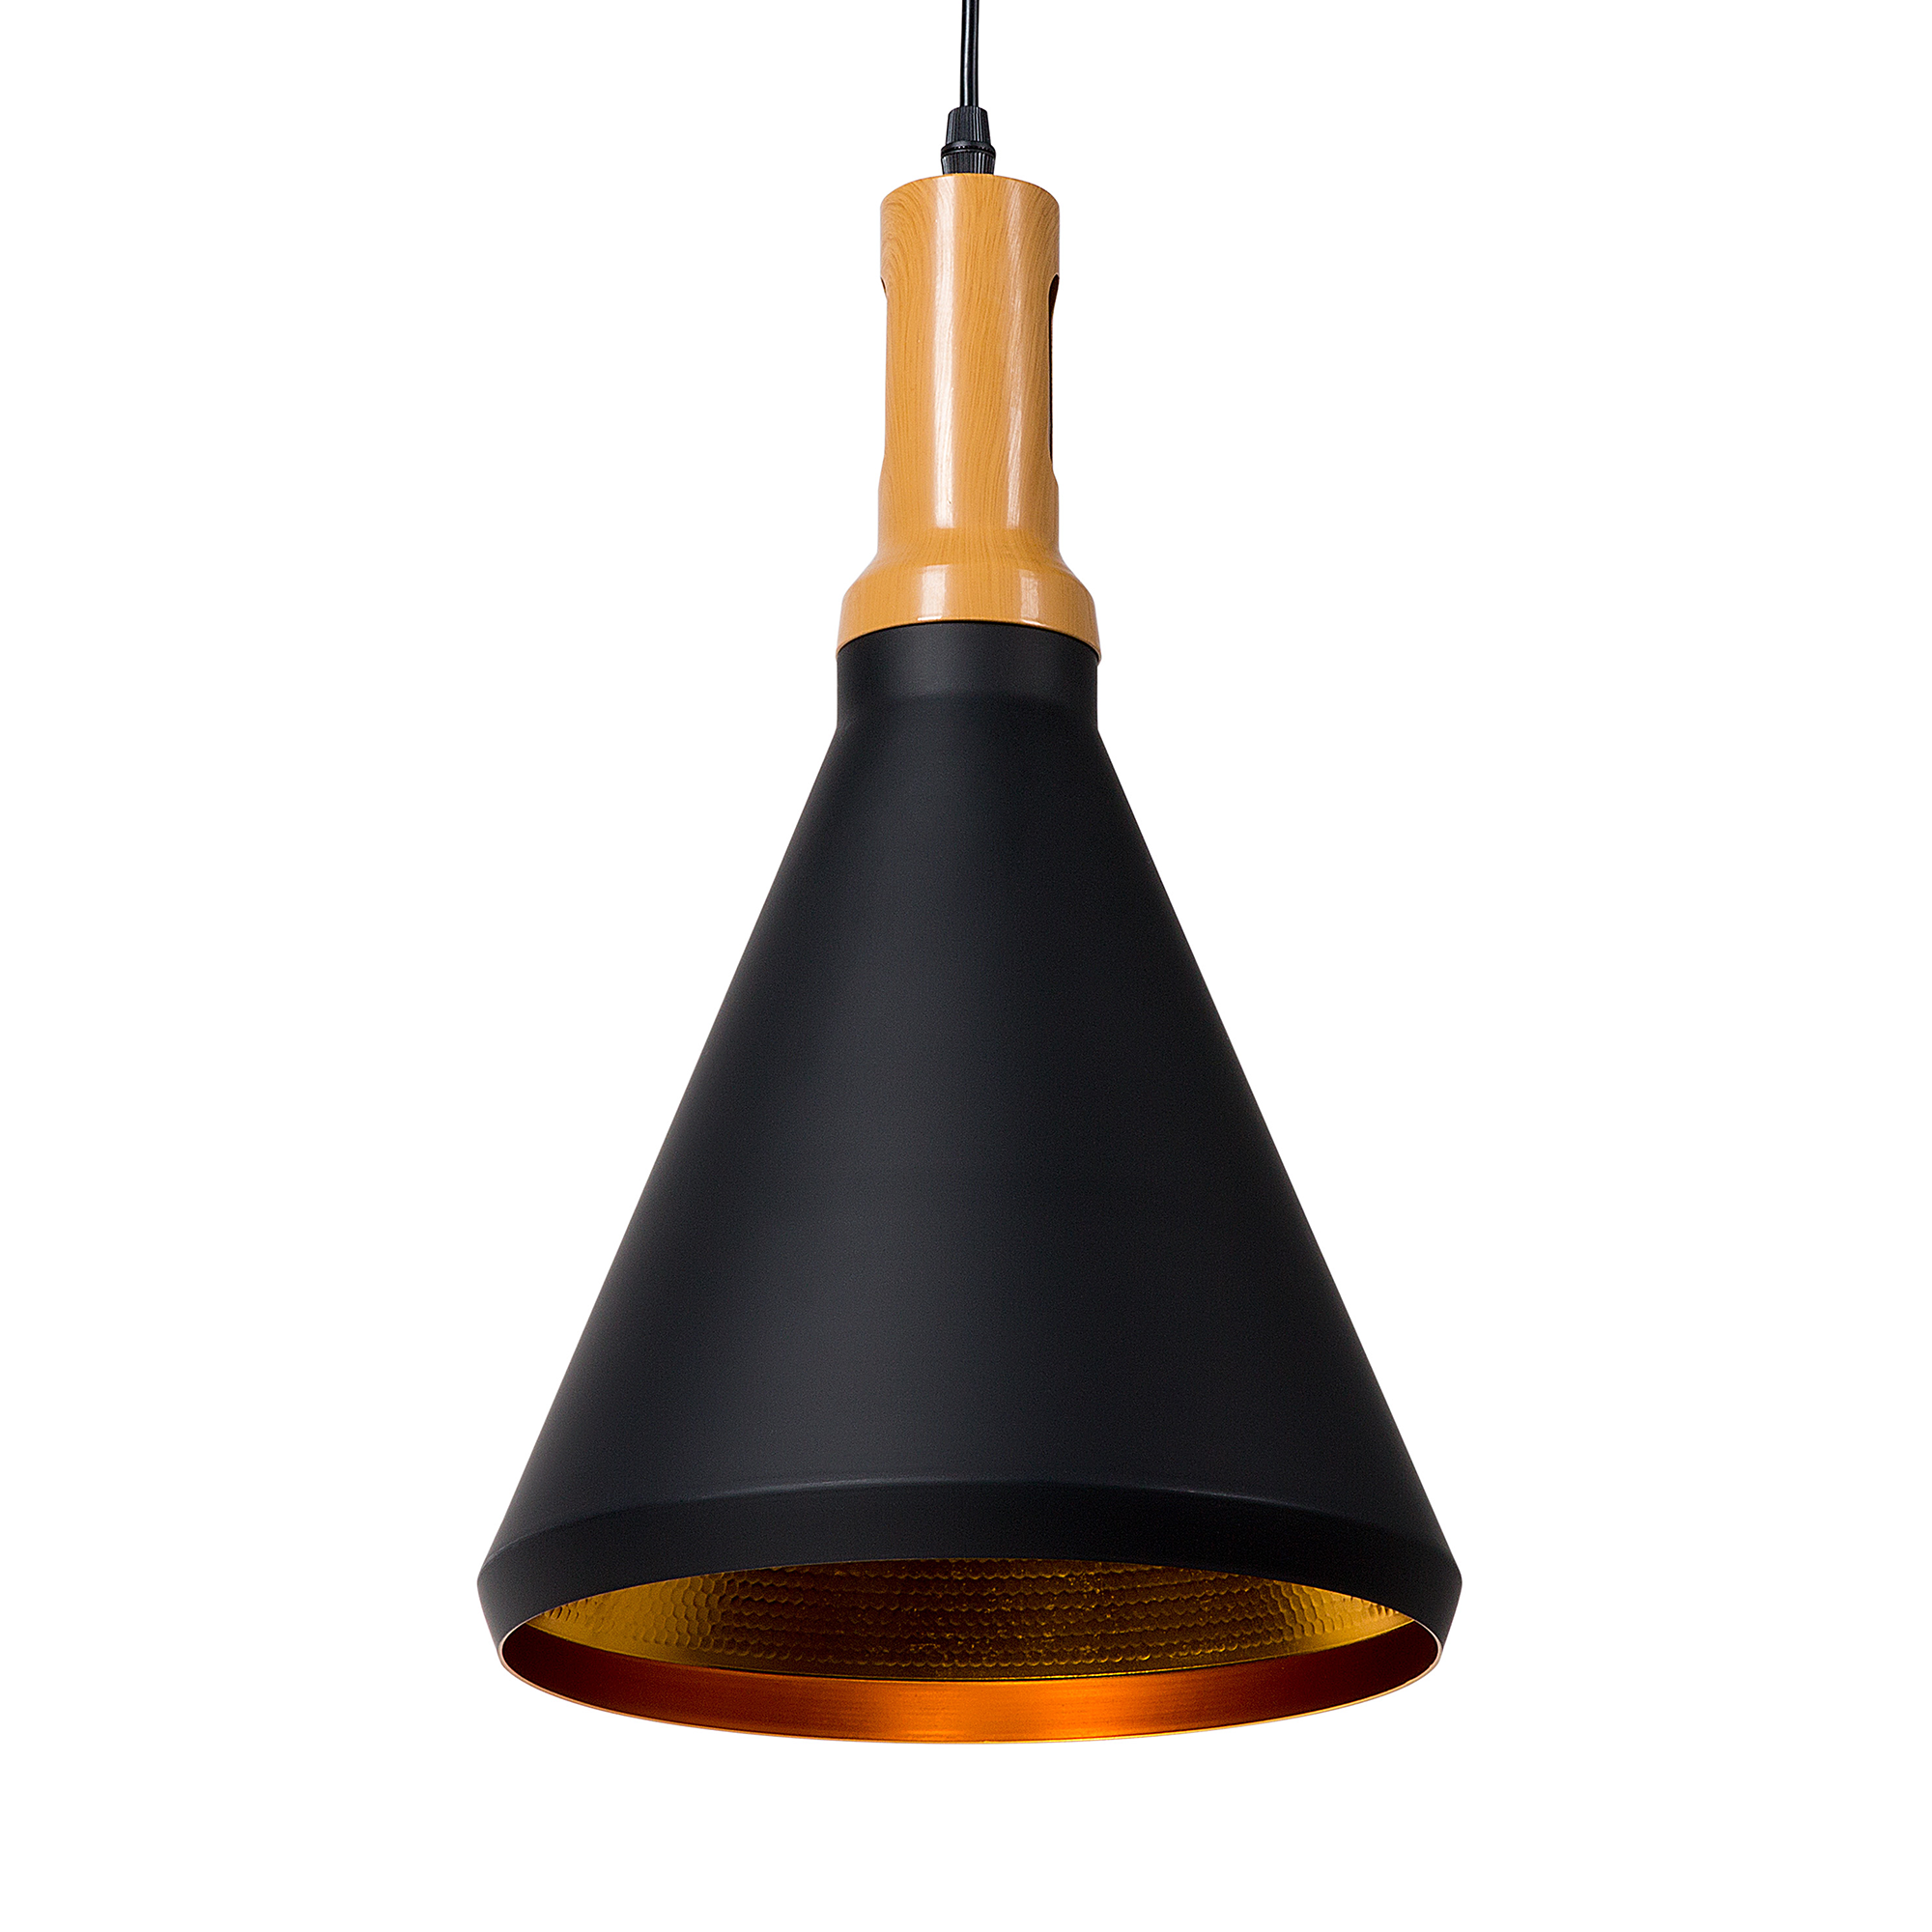 Beliani Hanging Light Pendant Lamp Black with Gold and Light Wood Aluminium Cone Shade Industrial Design